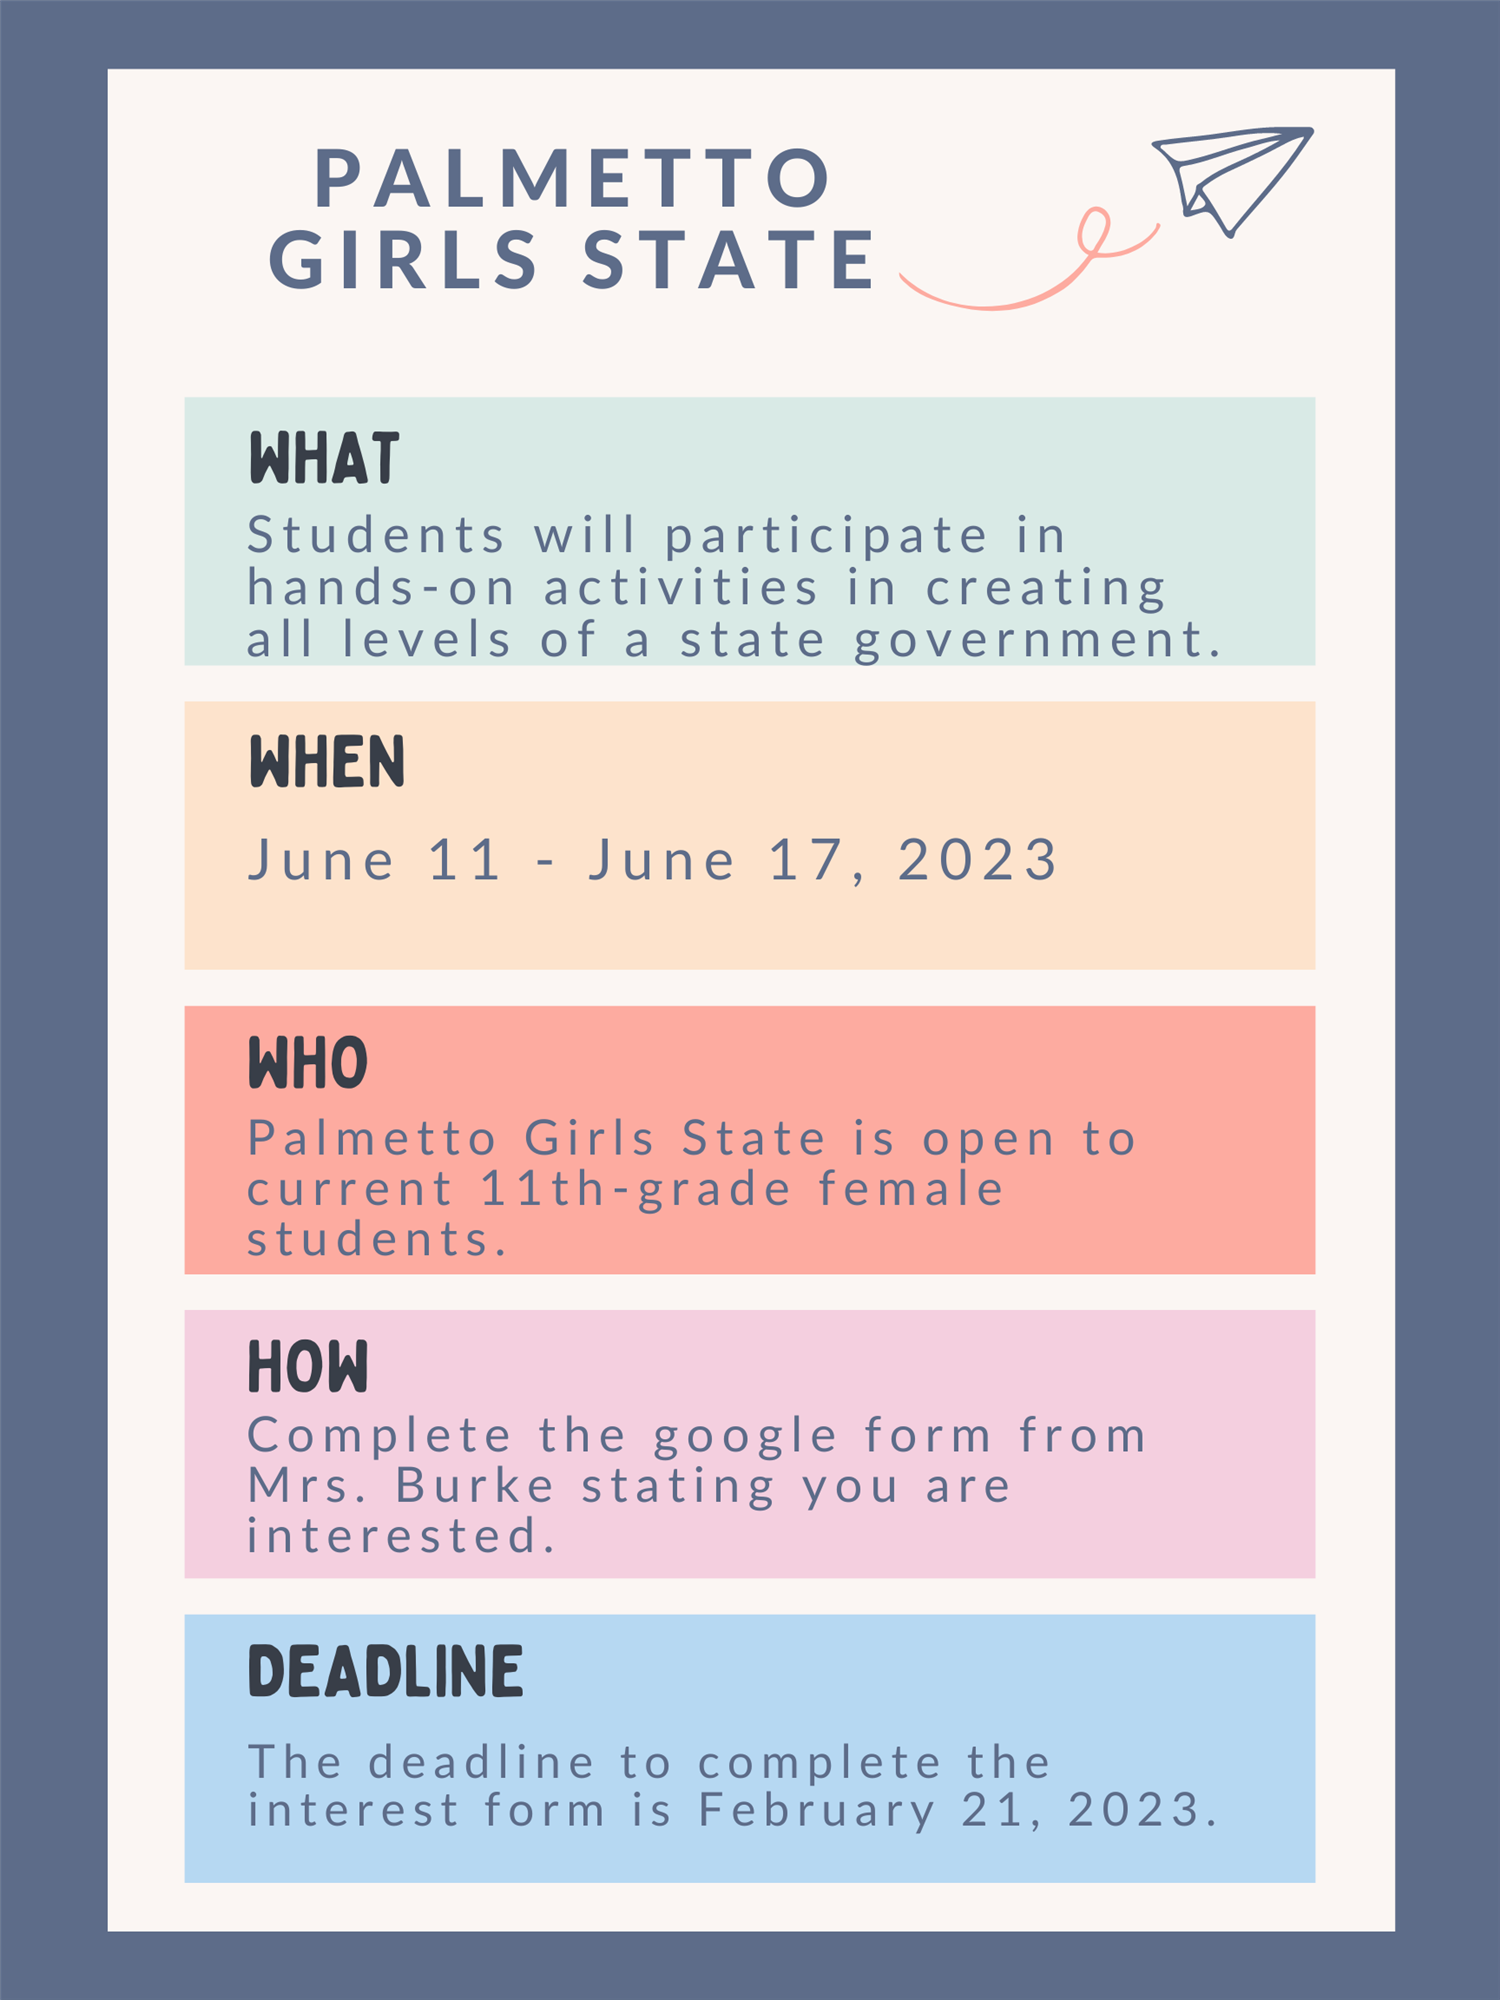  Girls State information